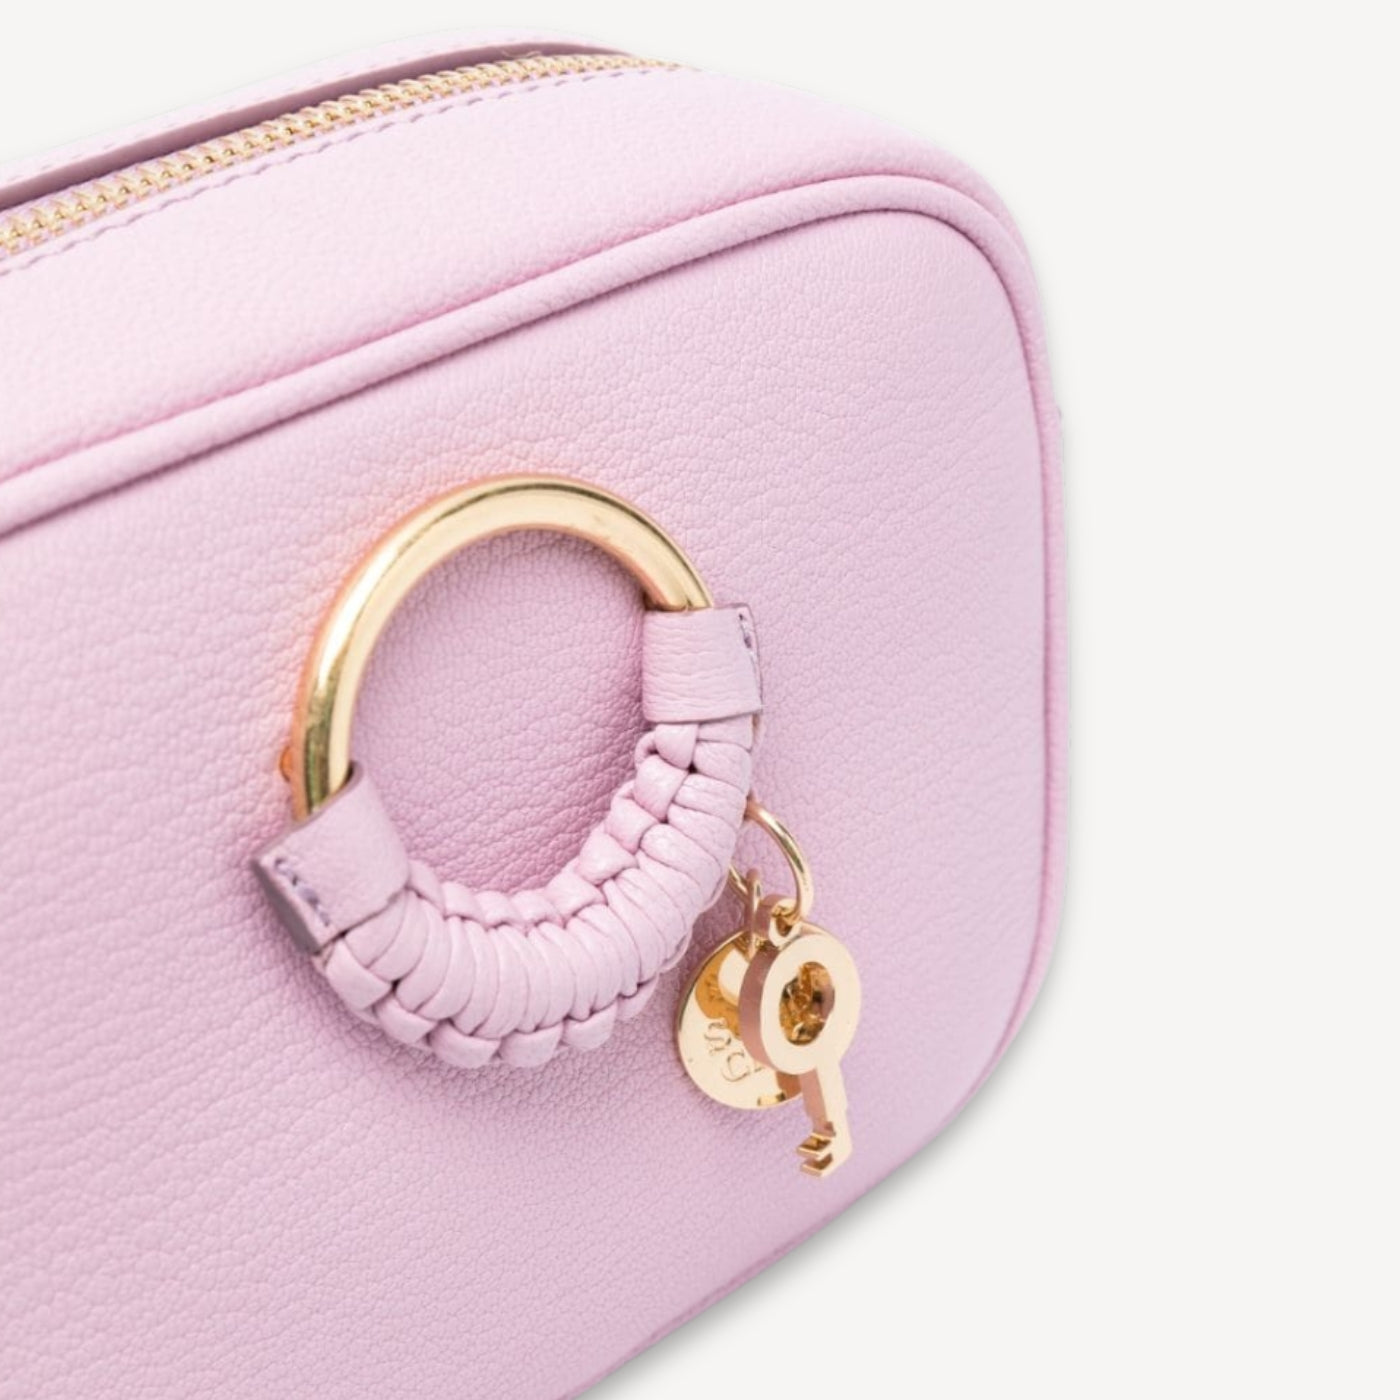 Hana Camera Case in Lavender Mist Handbags SEE BY CHLOE - LOLAMIR